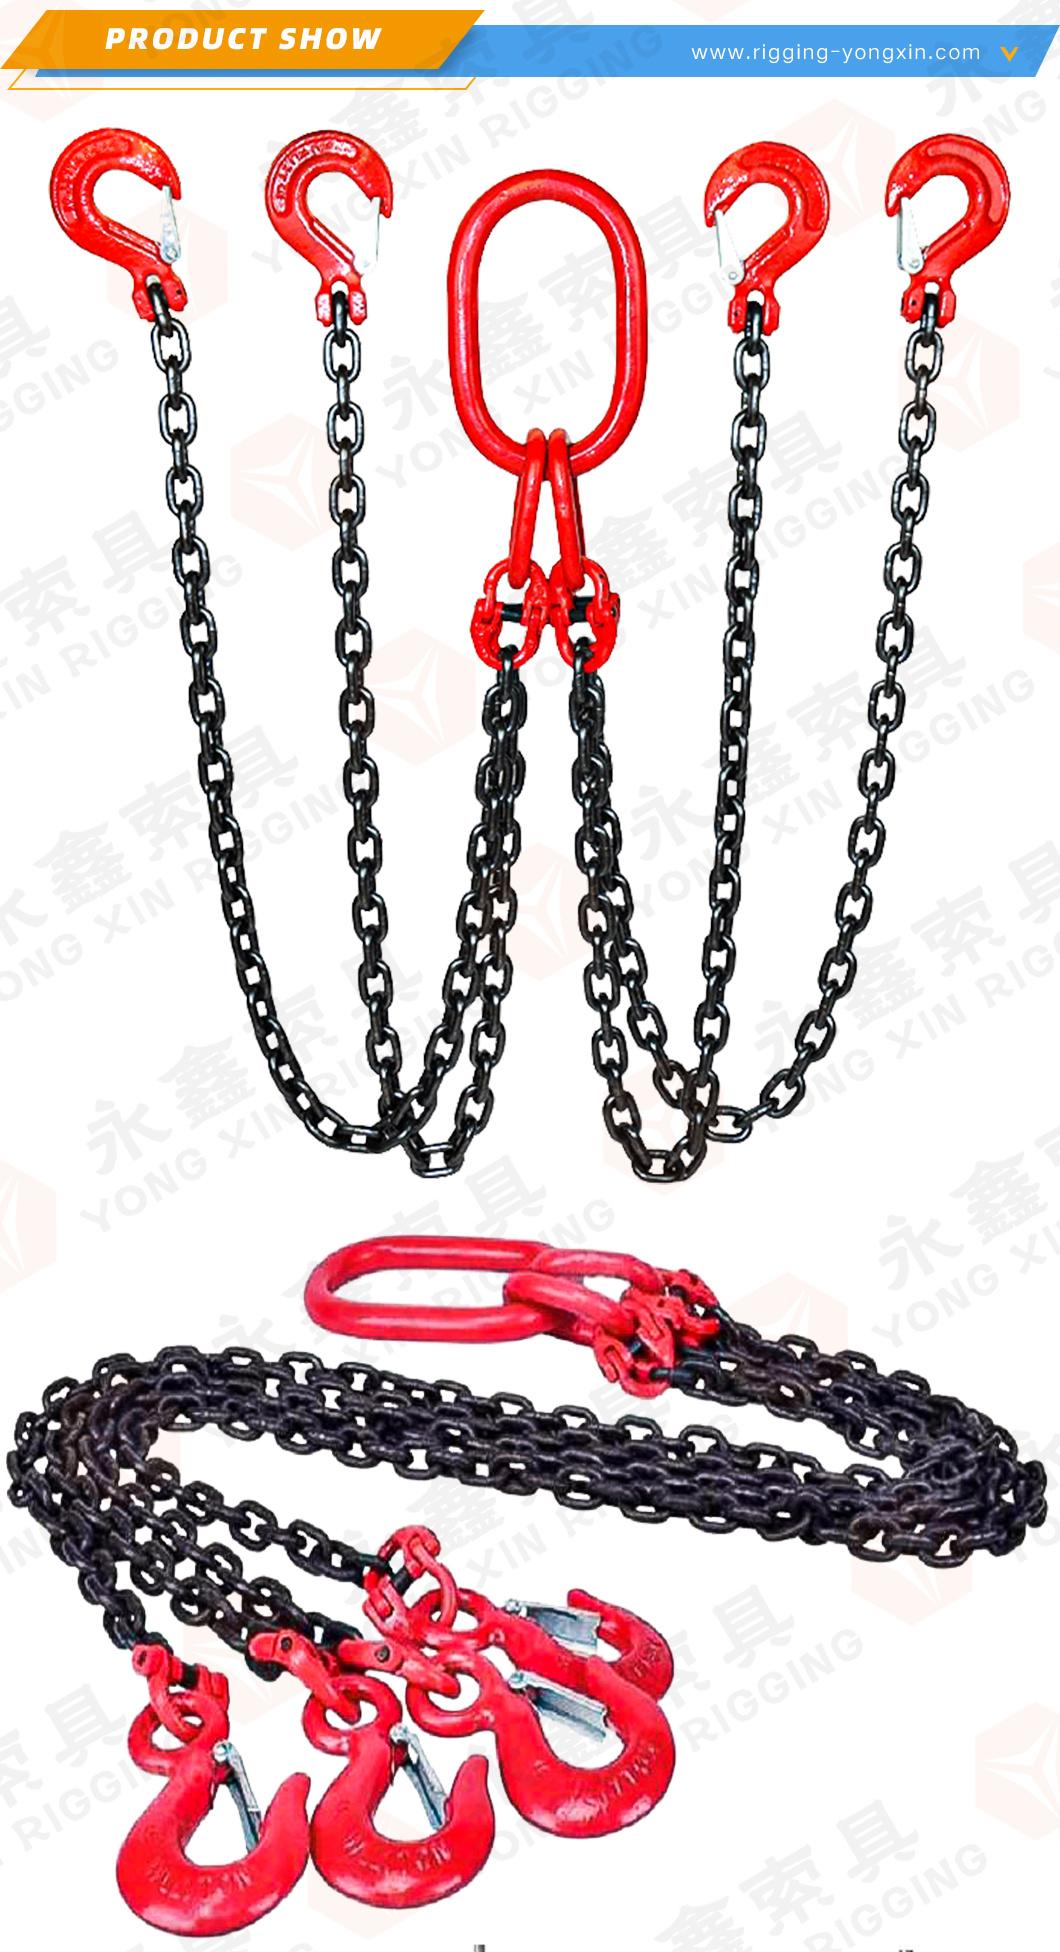 High Sterength Chain Sling Triple Leg with Grab Hooks